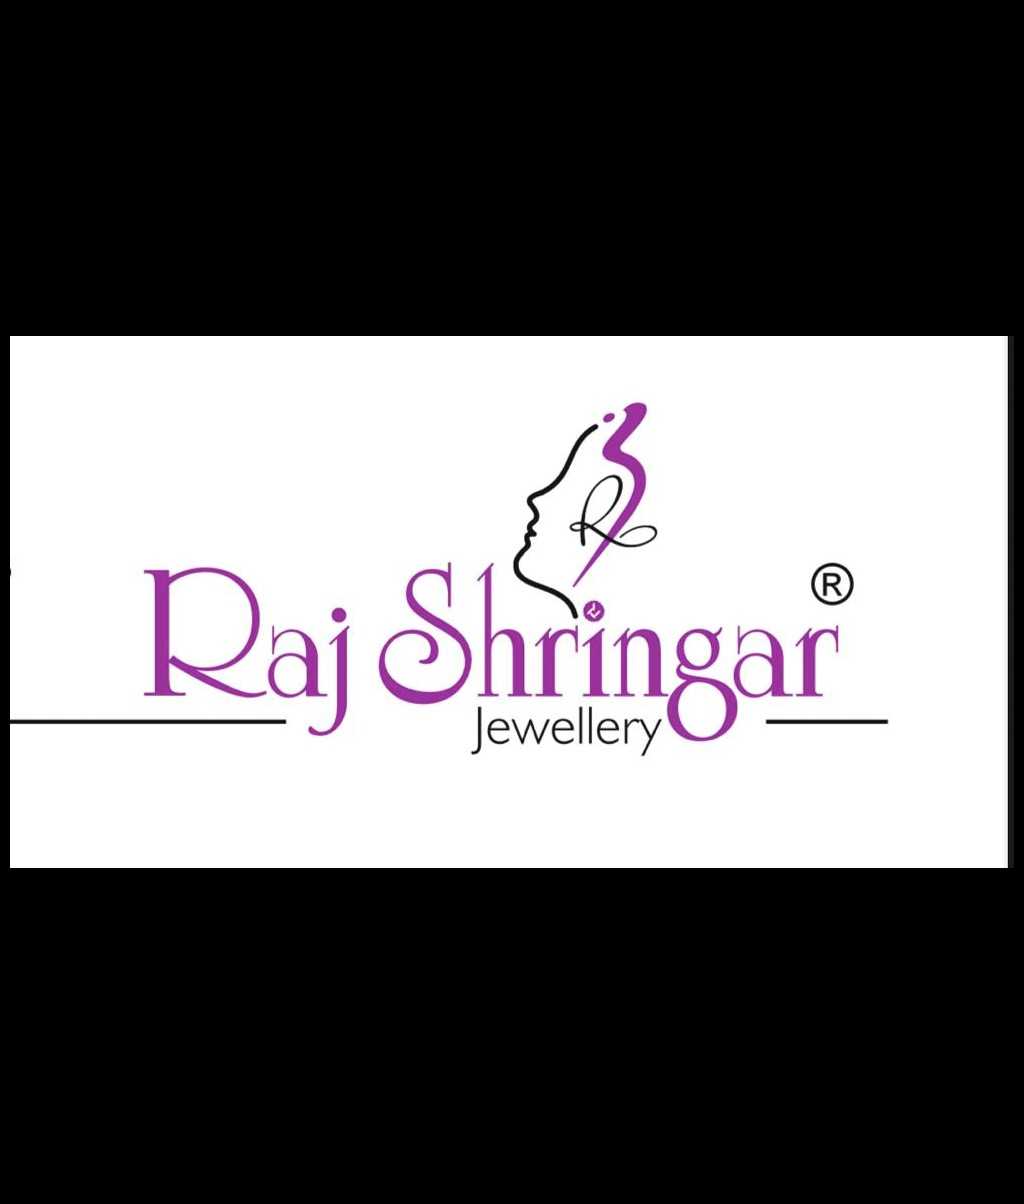 Raj Shringar Jewellery